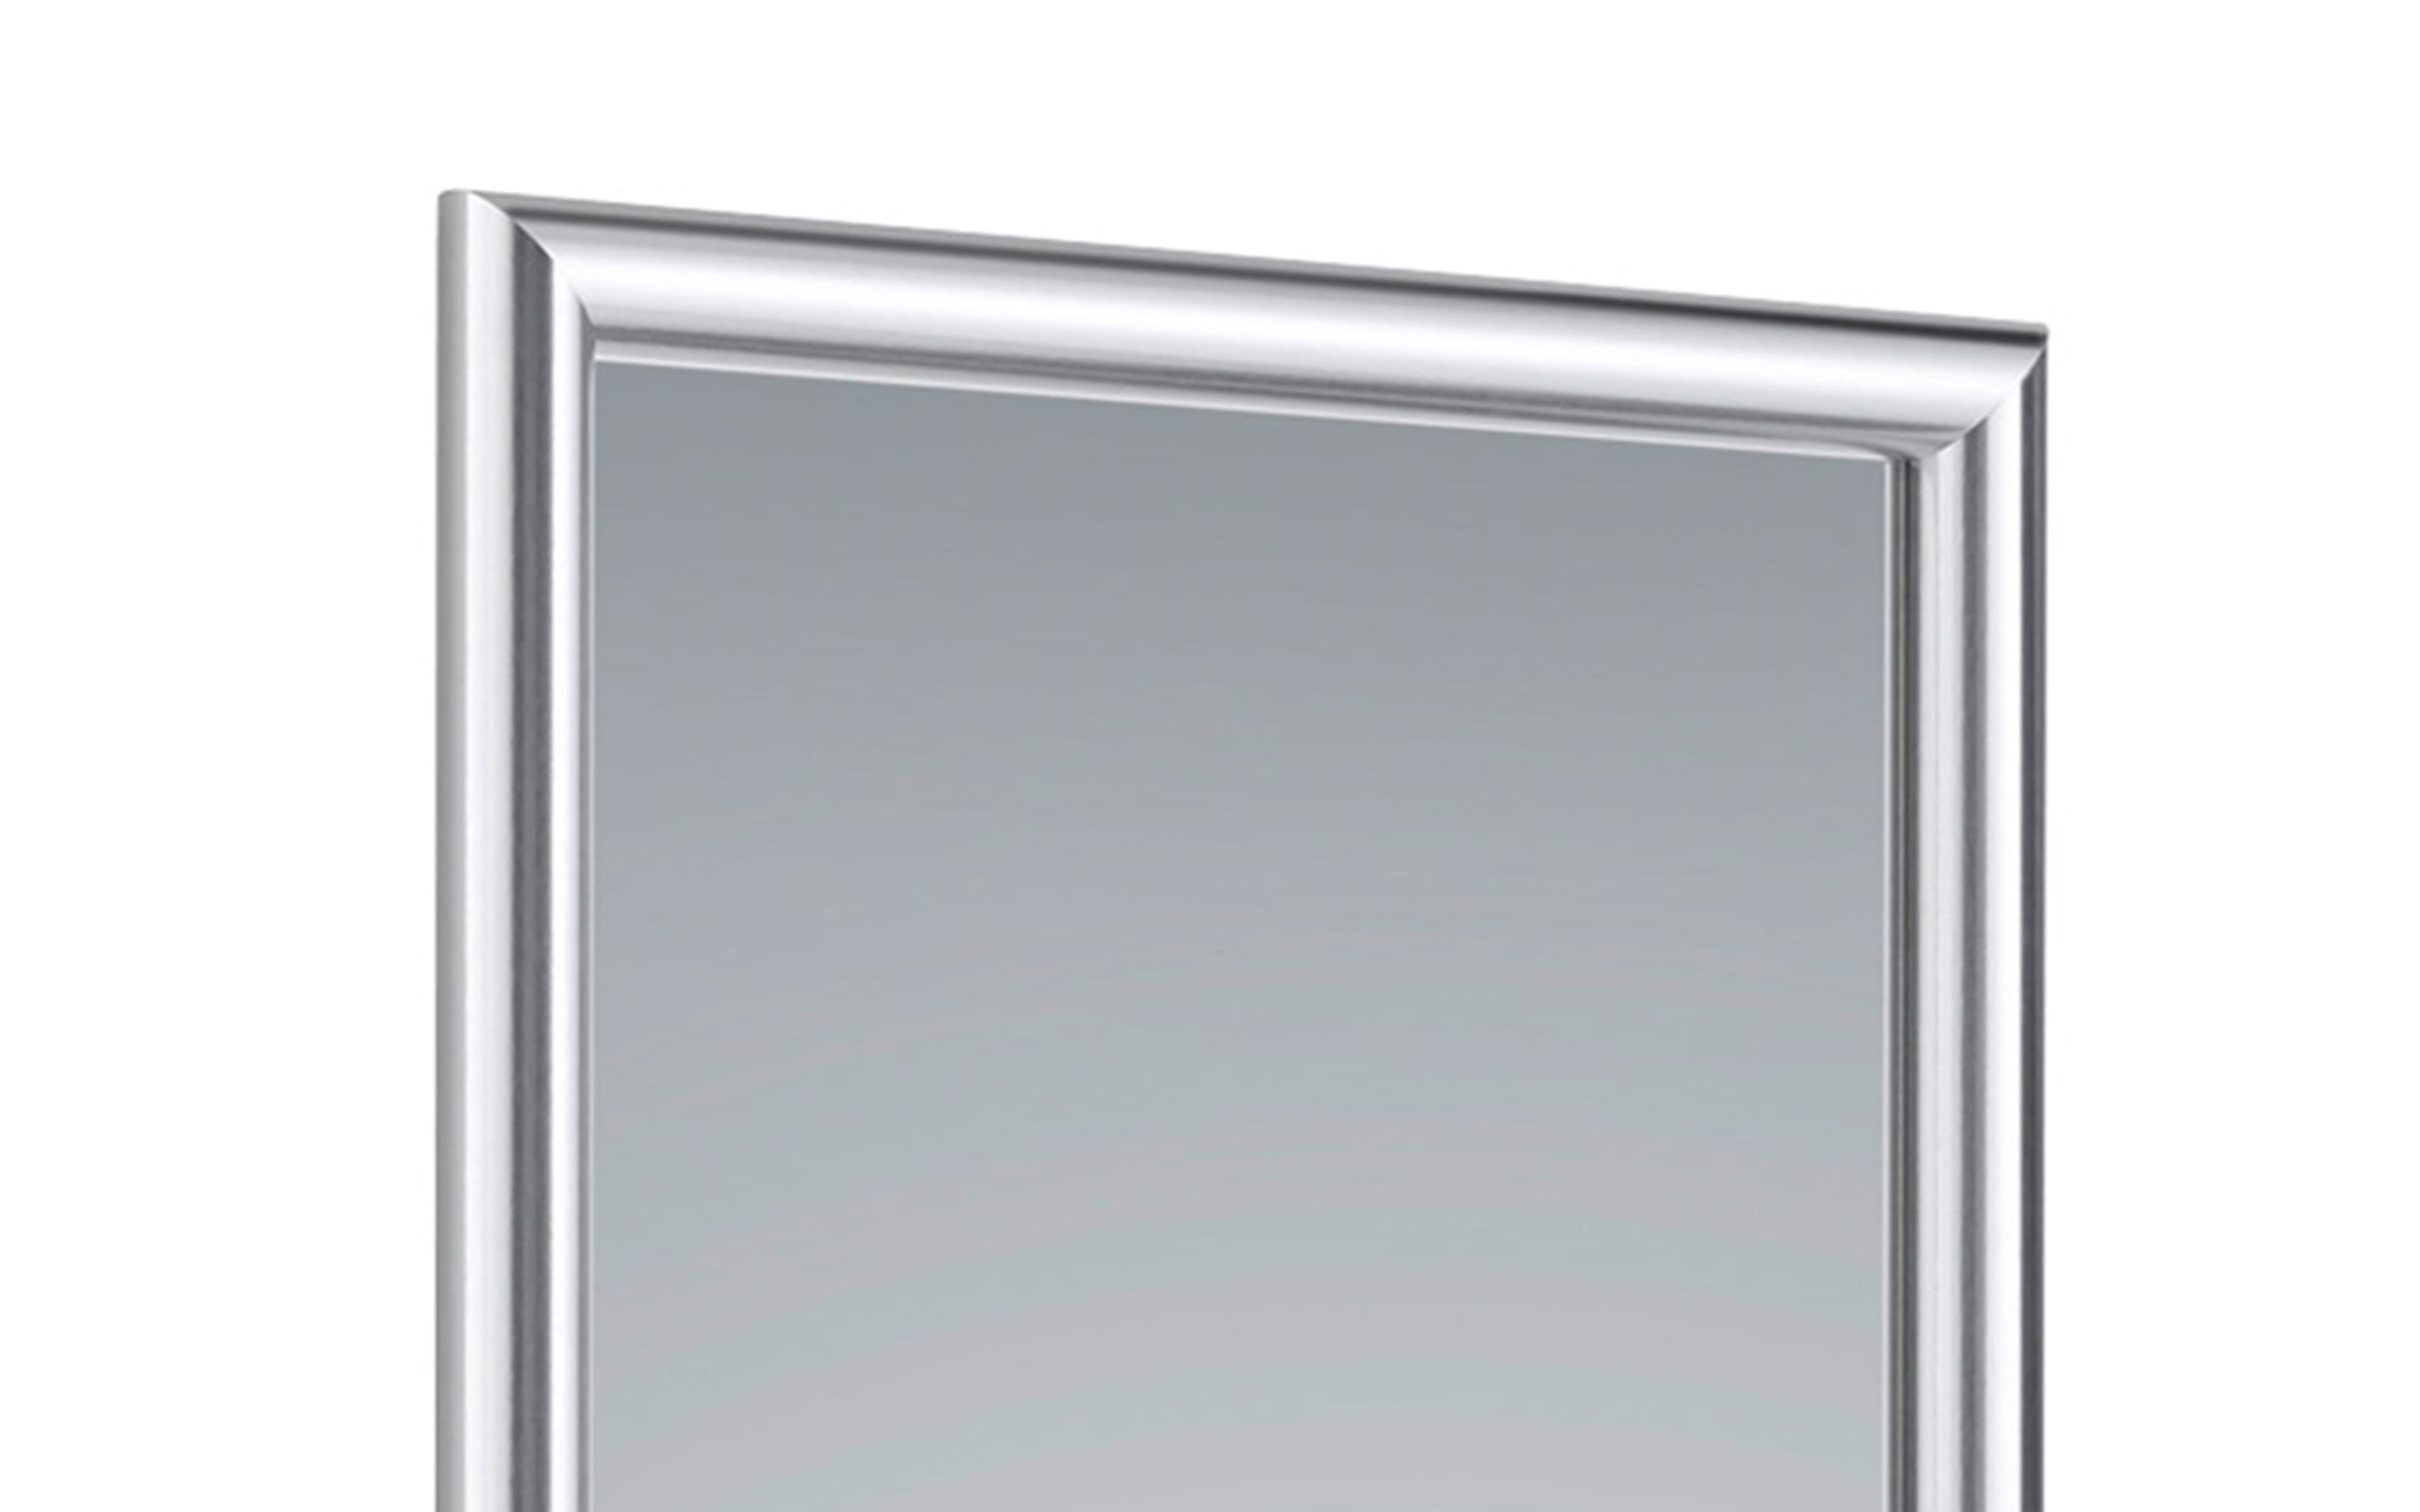 Rahmenspiegel Sophie in chromfarbig, 70 x 170 cm